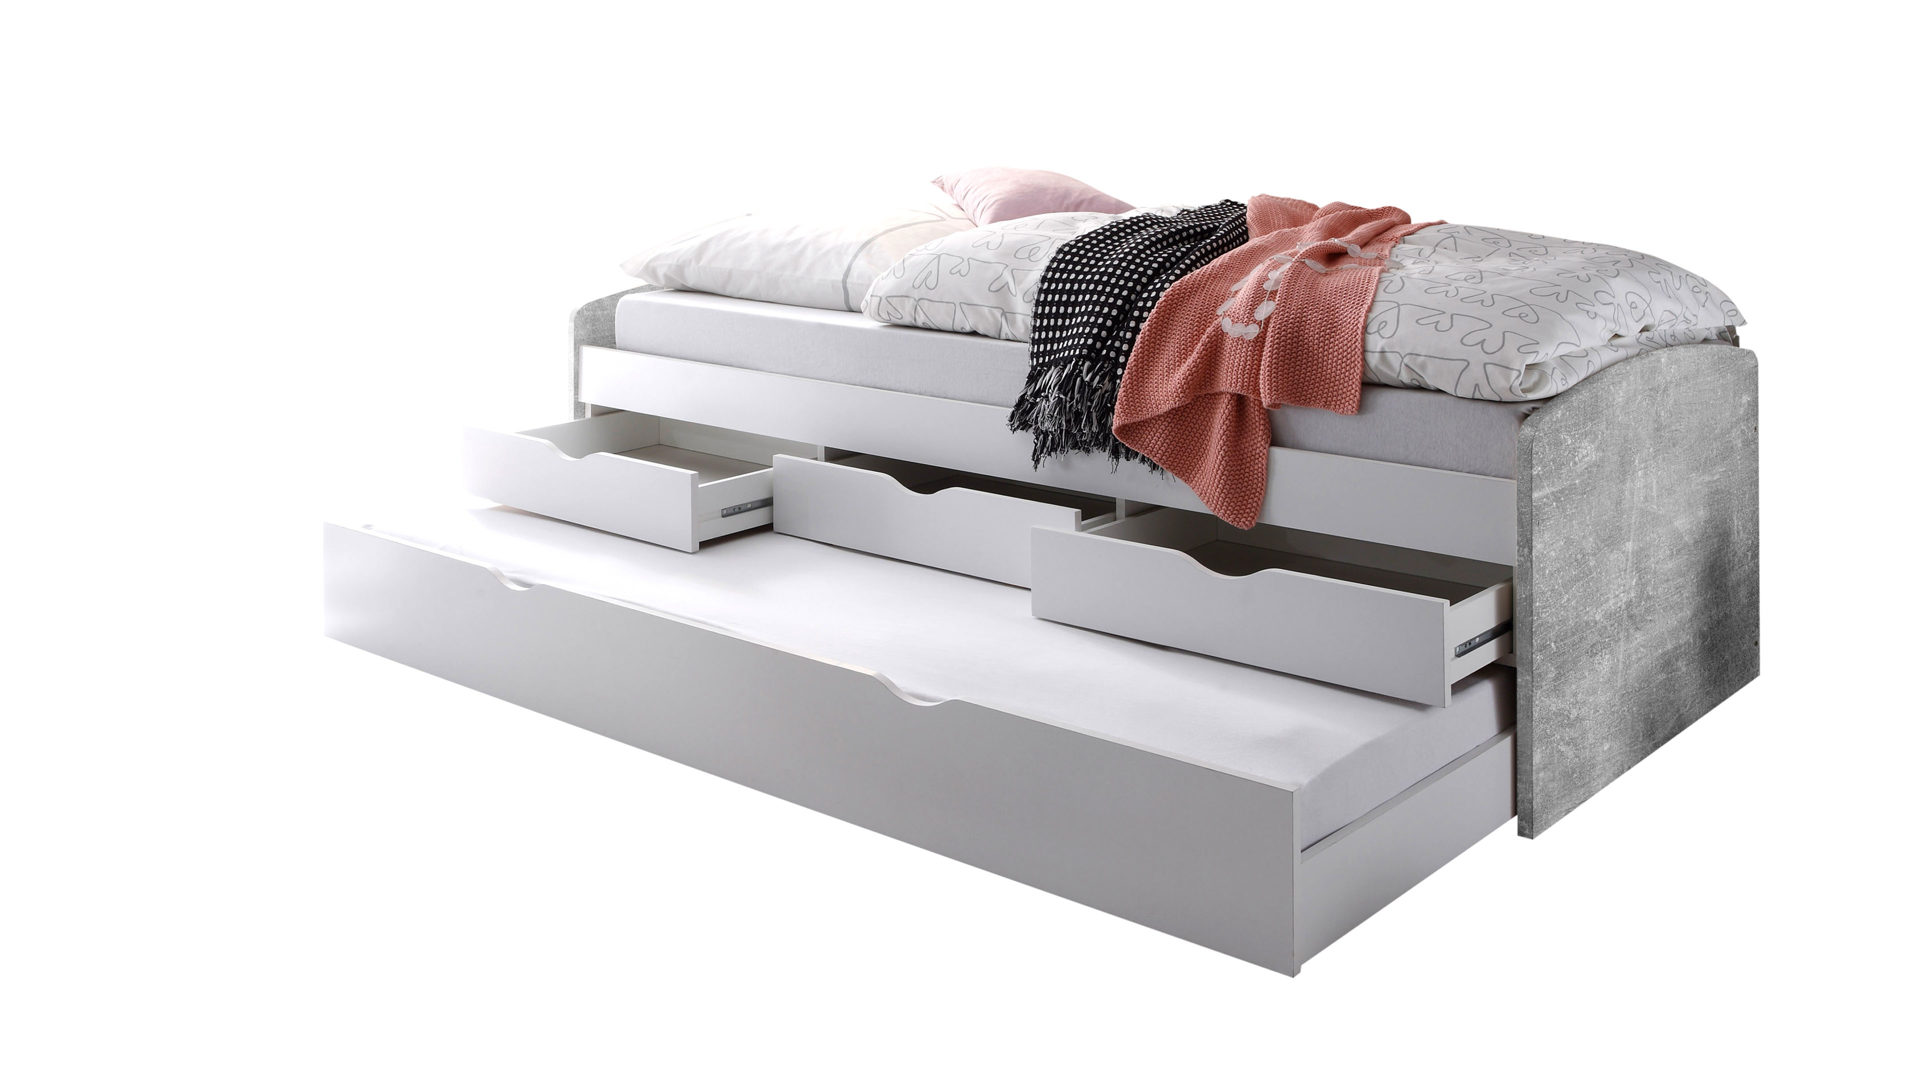 Funktionsbett Begabino aus Holz in Grau Funktionsbettgesell betonfarbene & weiße Kunststoffoberflächen – Liegefläche ca. 90 x 200 cm